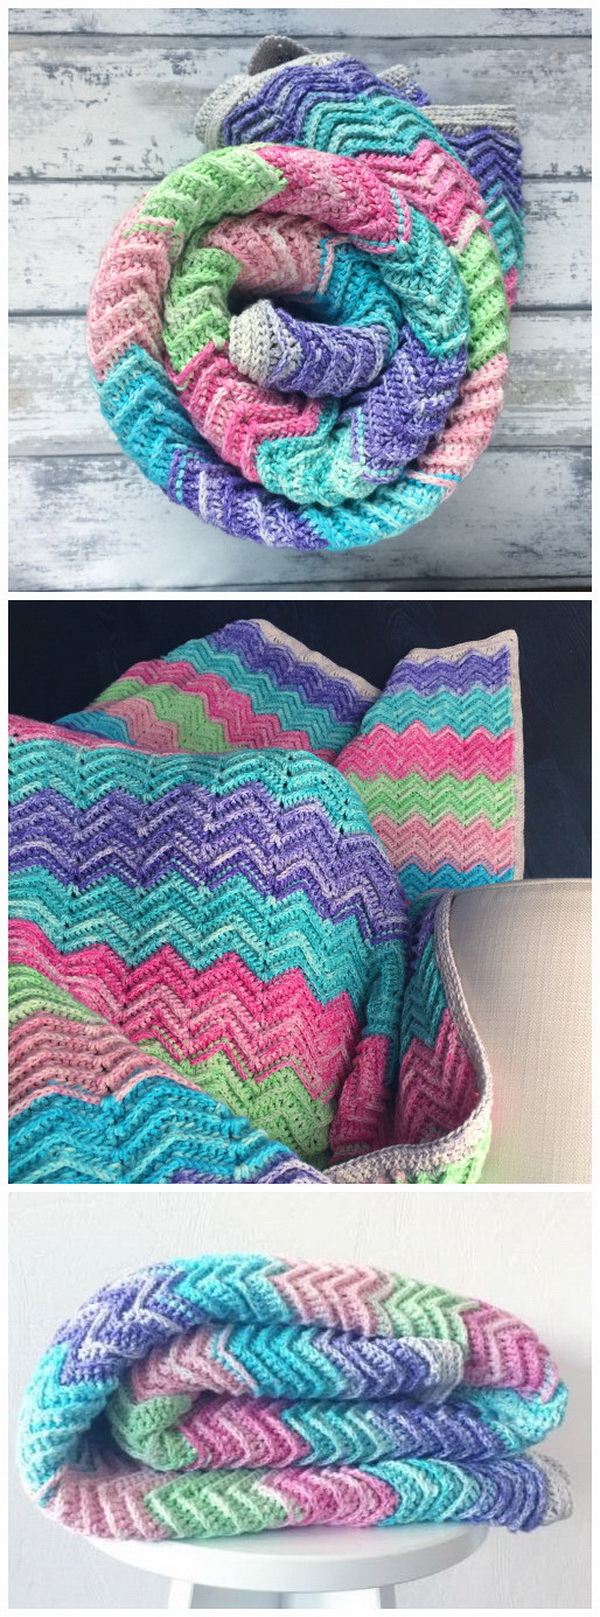 Quick And Easy Crochet Blanket Patterns For Beginners: Textured Chevron Blanket – Free Crochet Pattern. 